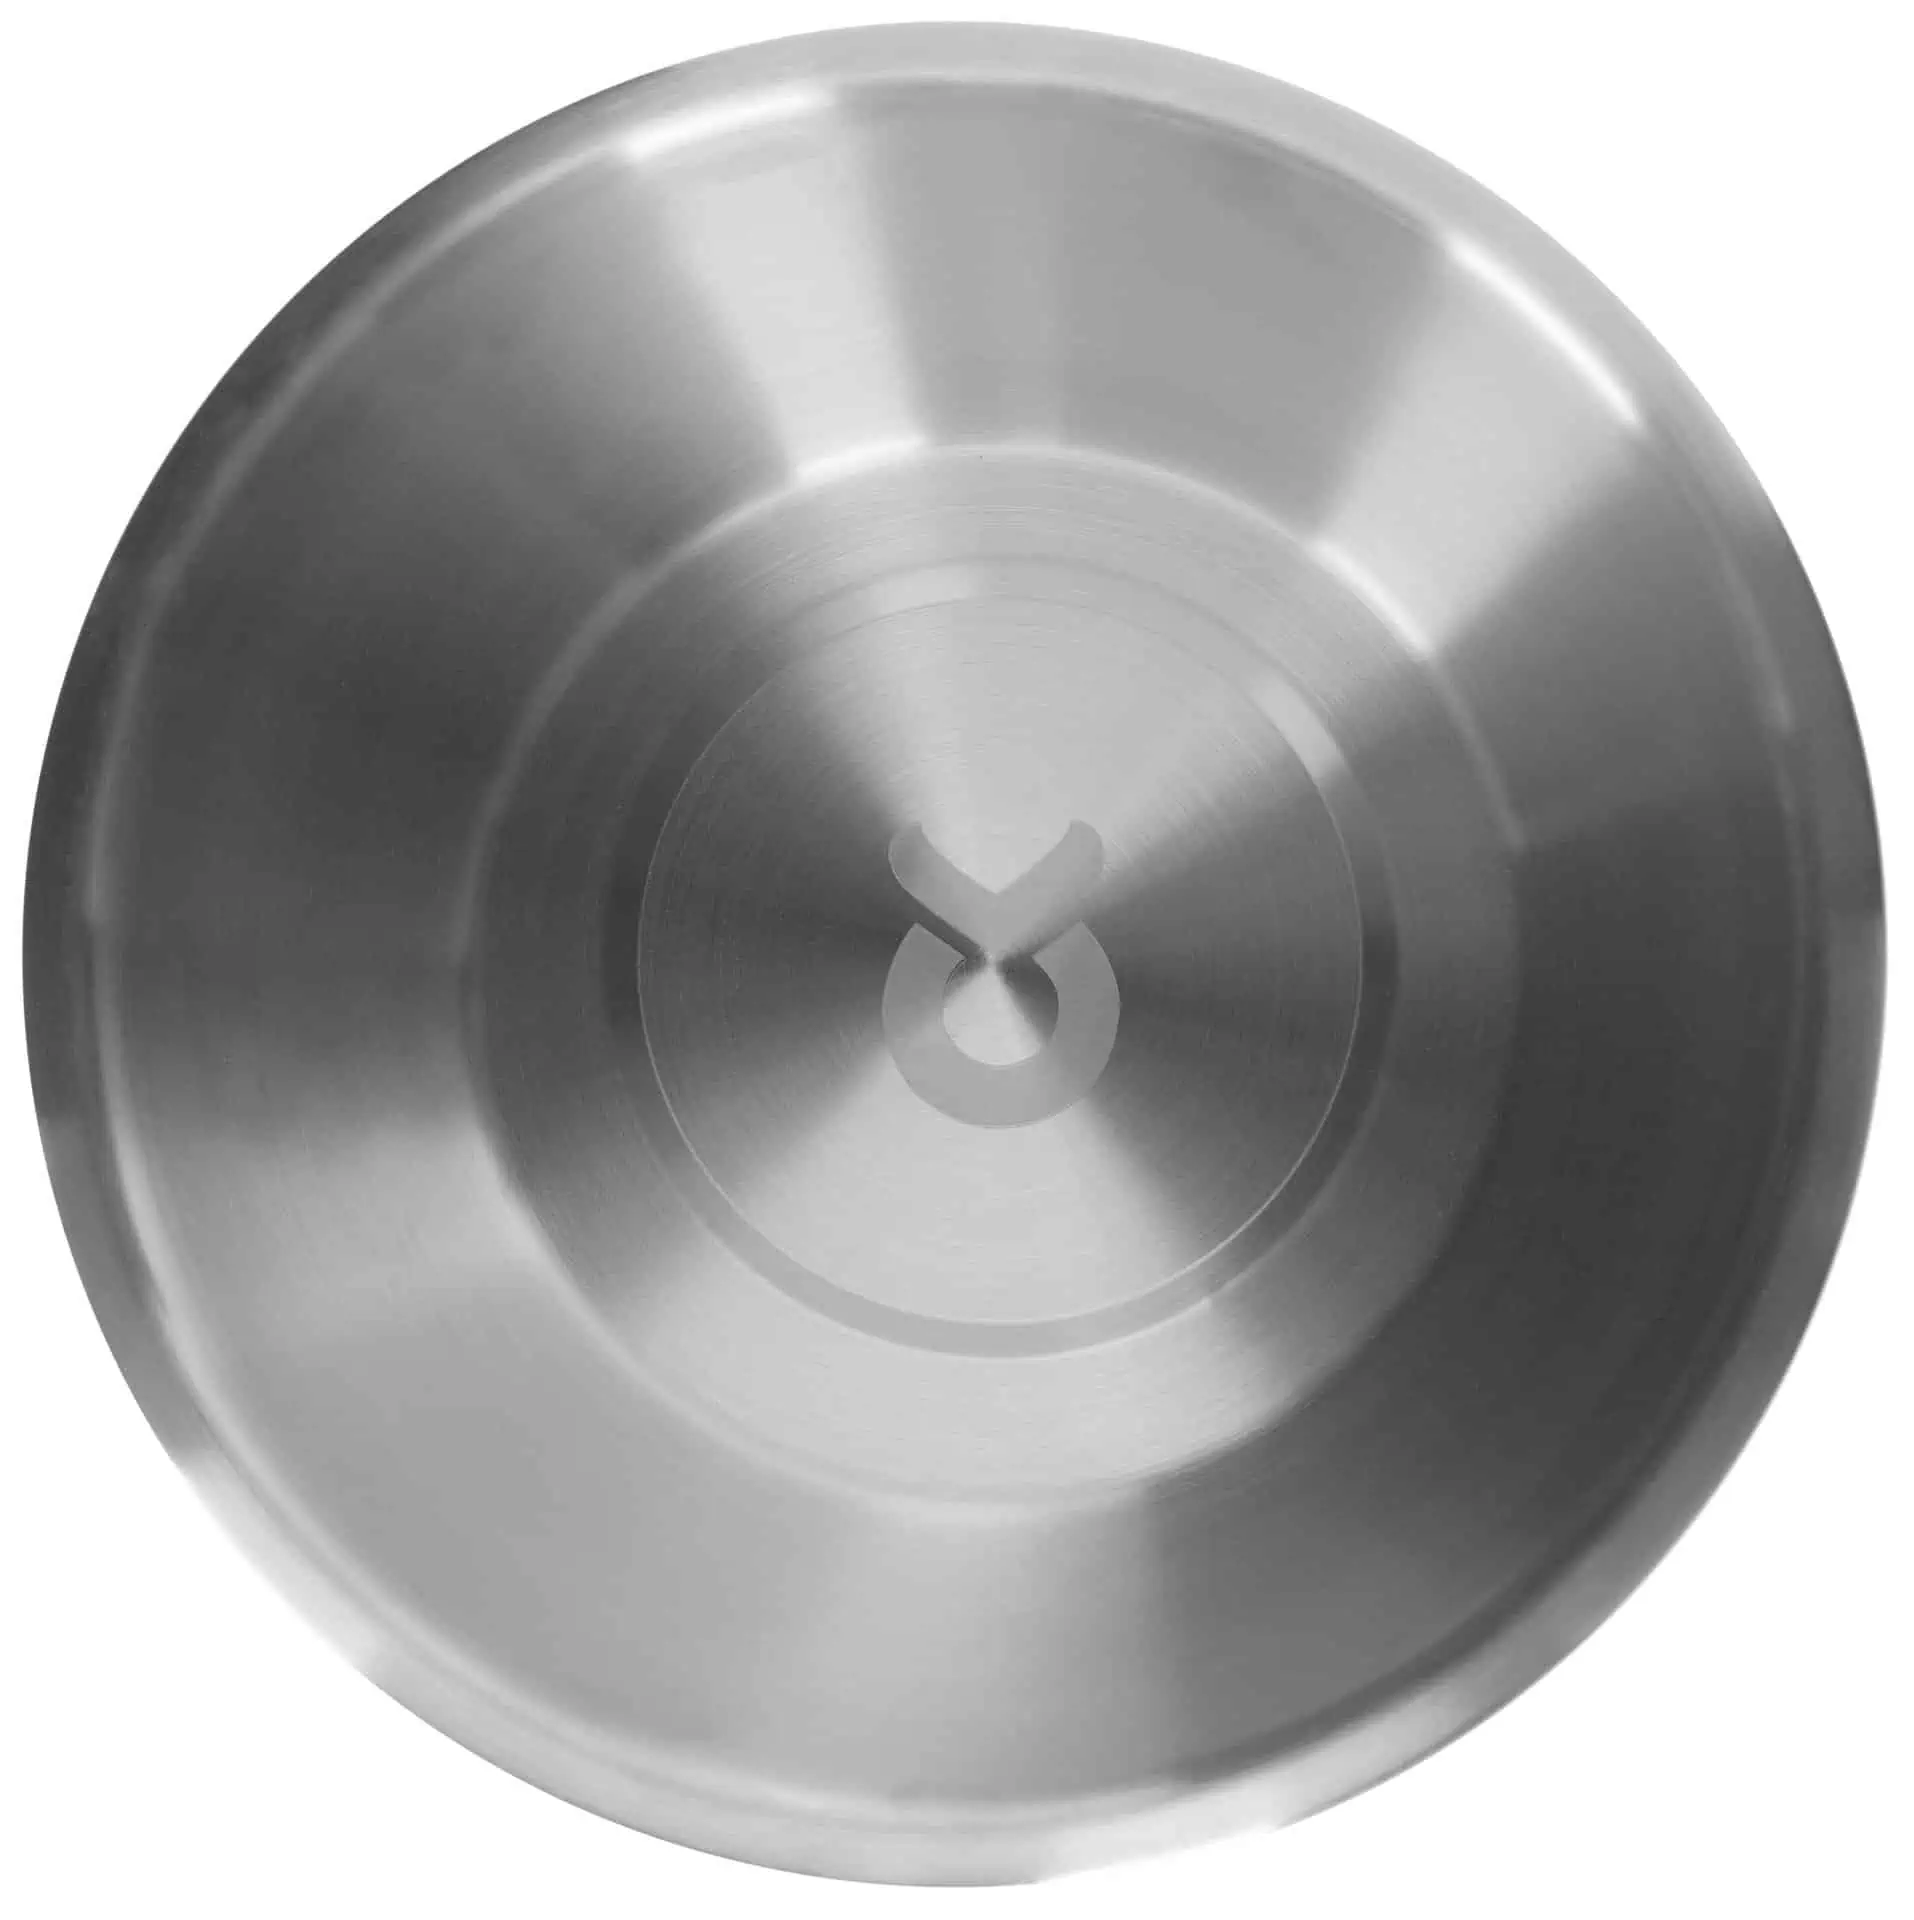 Feeding bowl stainless steel